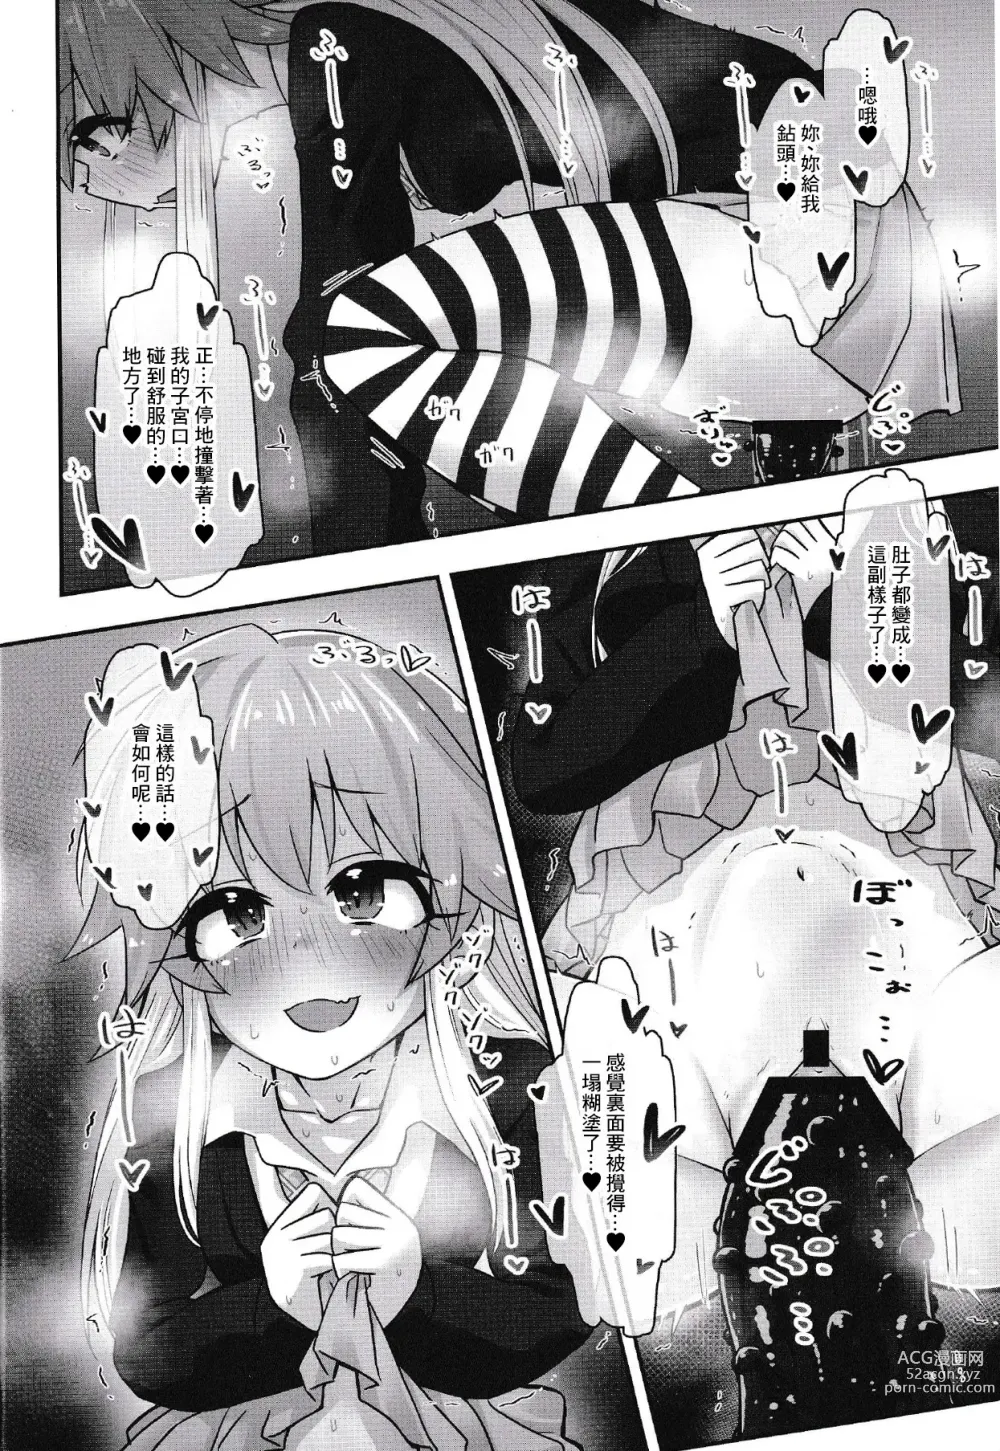 Page 5 of doujinshi Hentai Sekai no Seikou Ron <Trotology> Exte